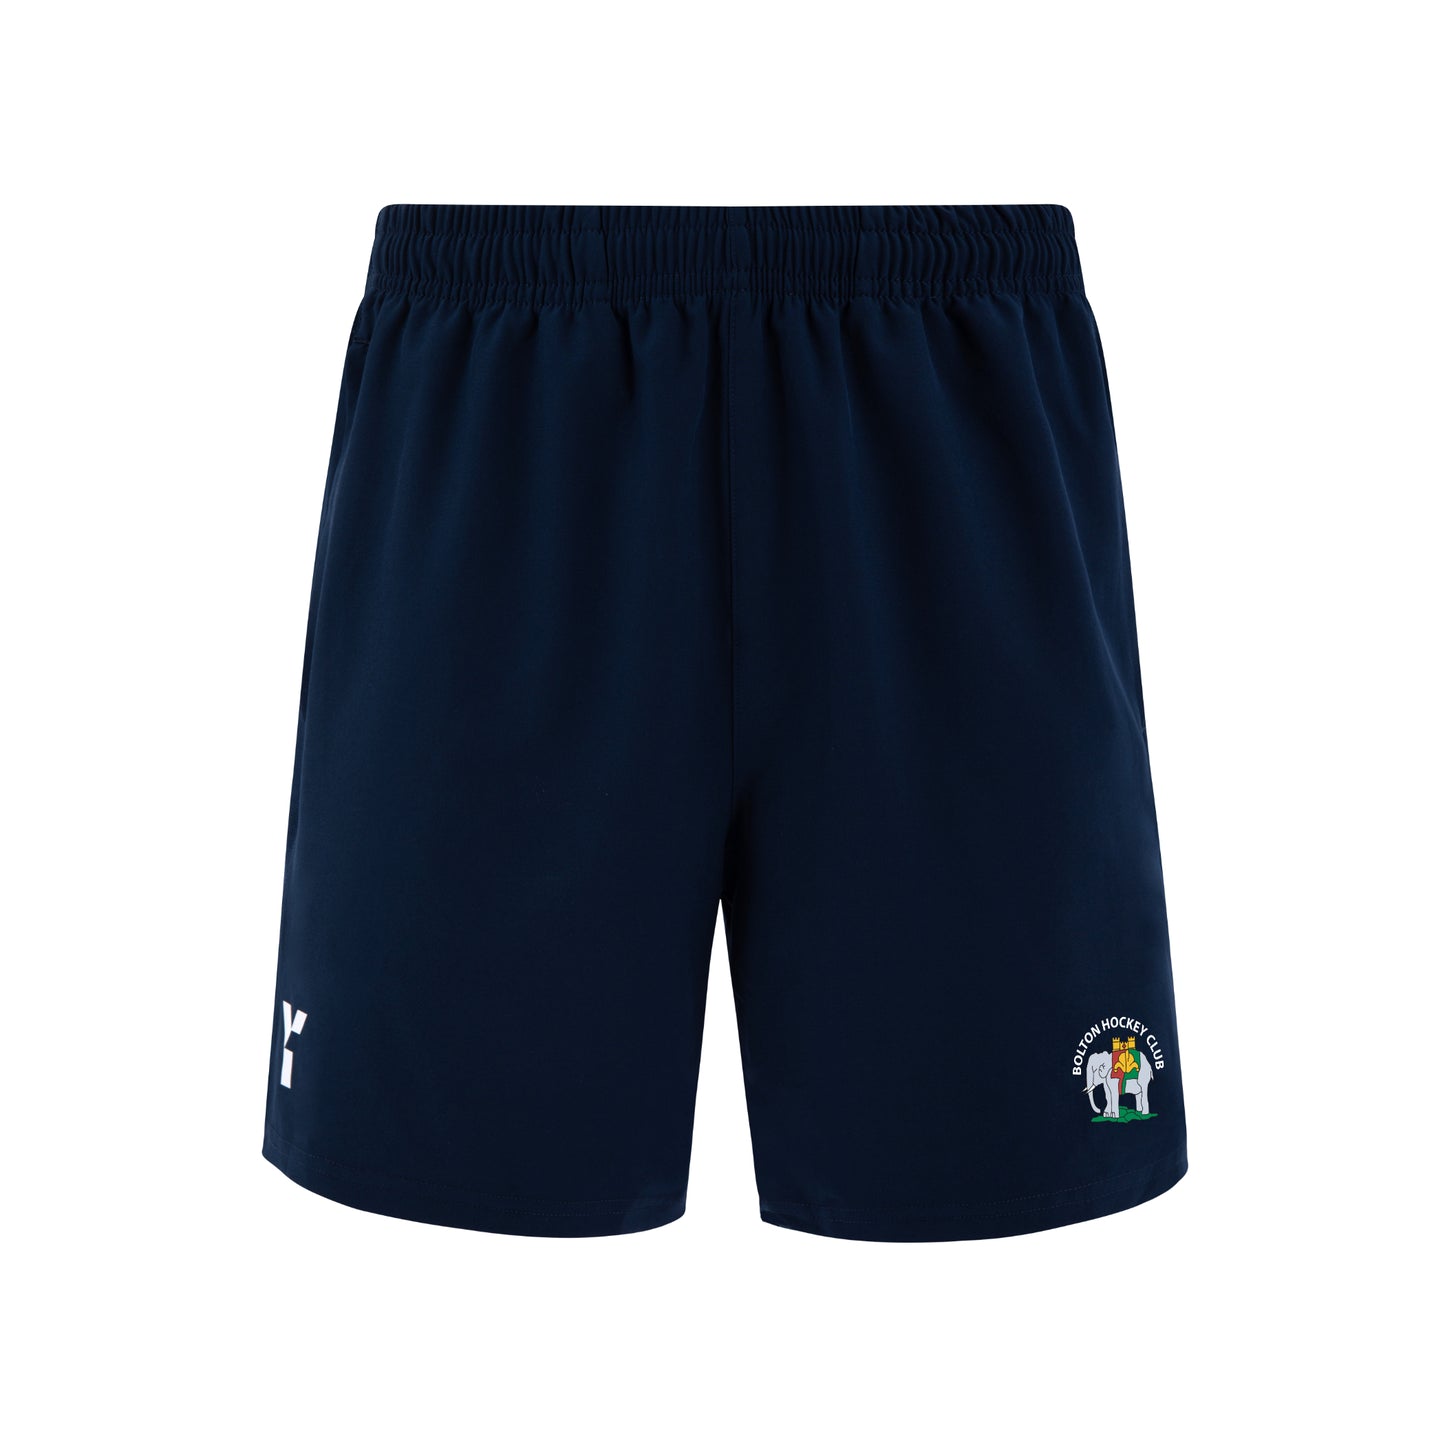 Bolton HC - Shorts Mens Navy